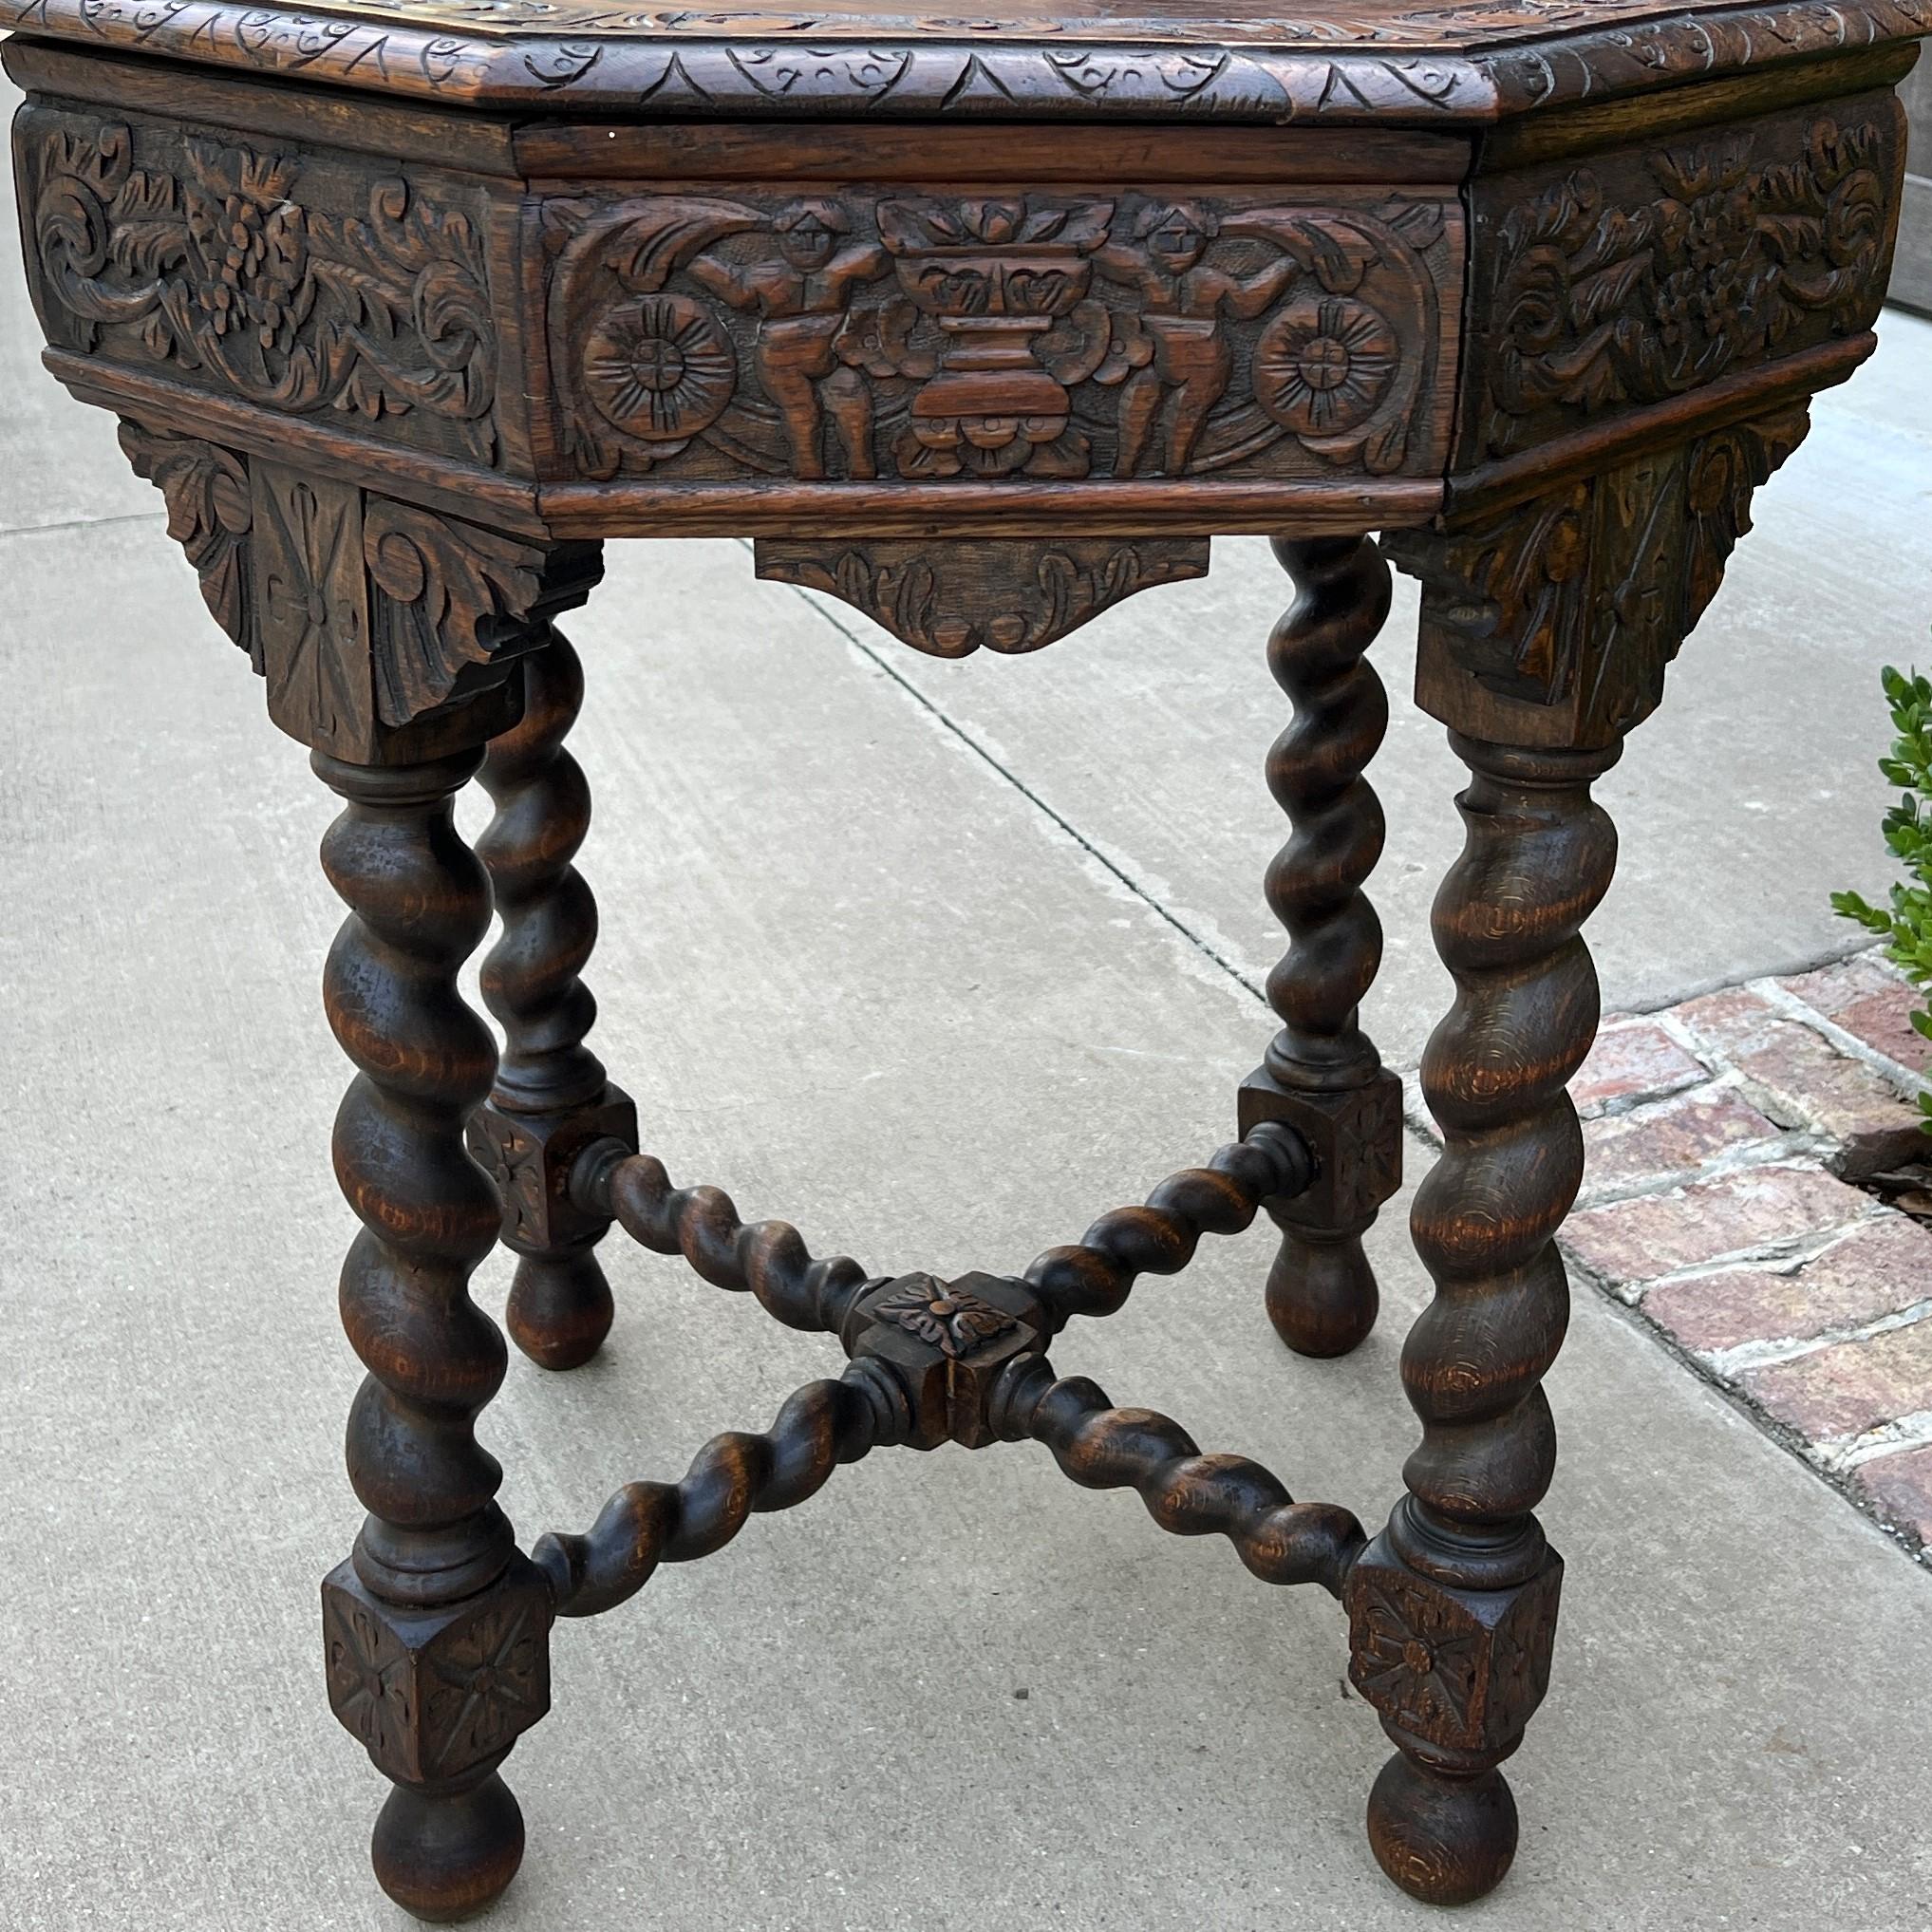 Antique French Table Barley Twist Octagonal Renaissance Revival Carved Oak 19thc For Sale 10